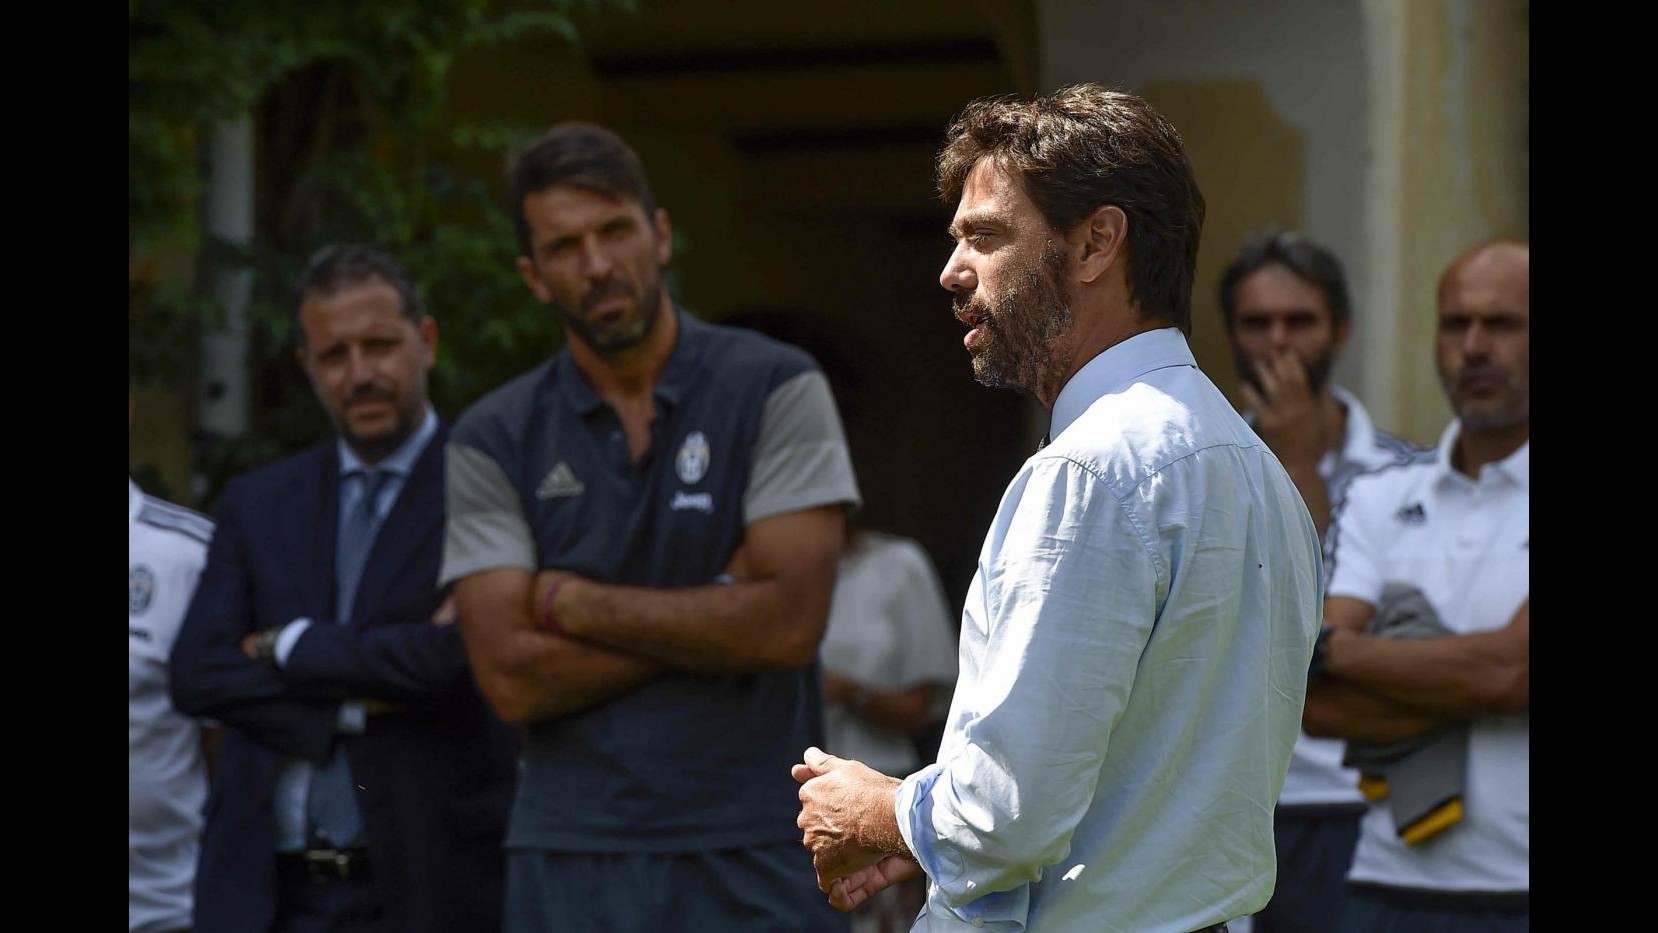 FOTO Juventus, squadra in visita a Villa Agnelli a Villar Perosa